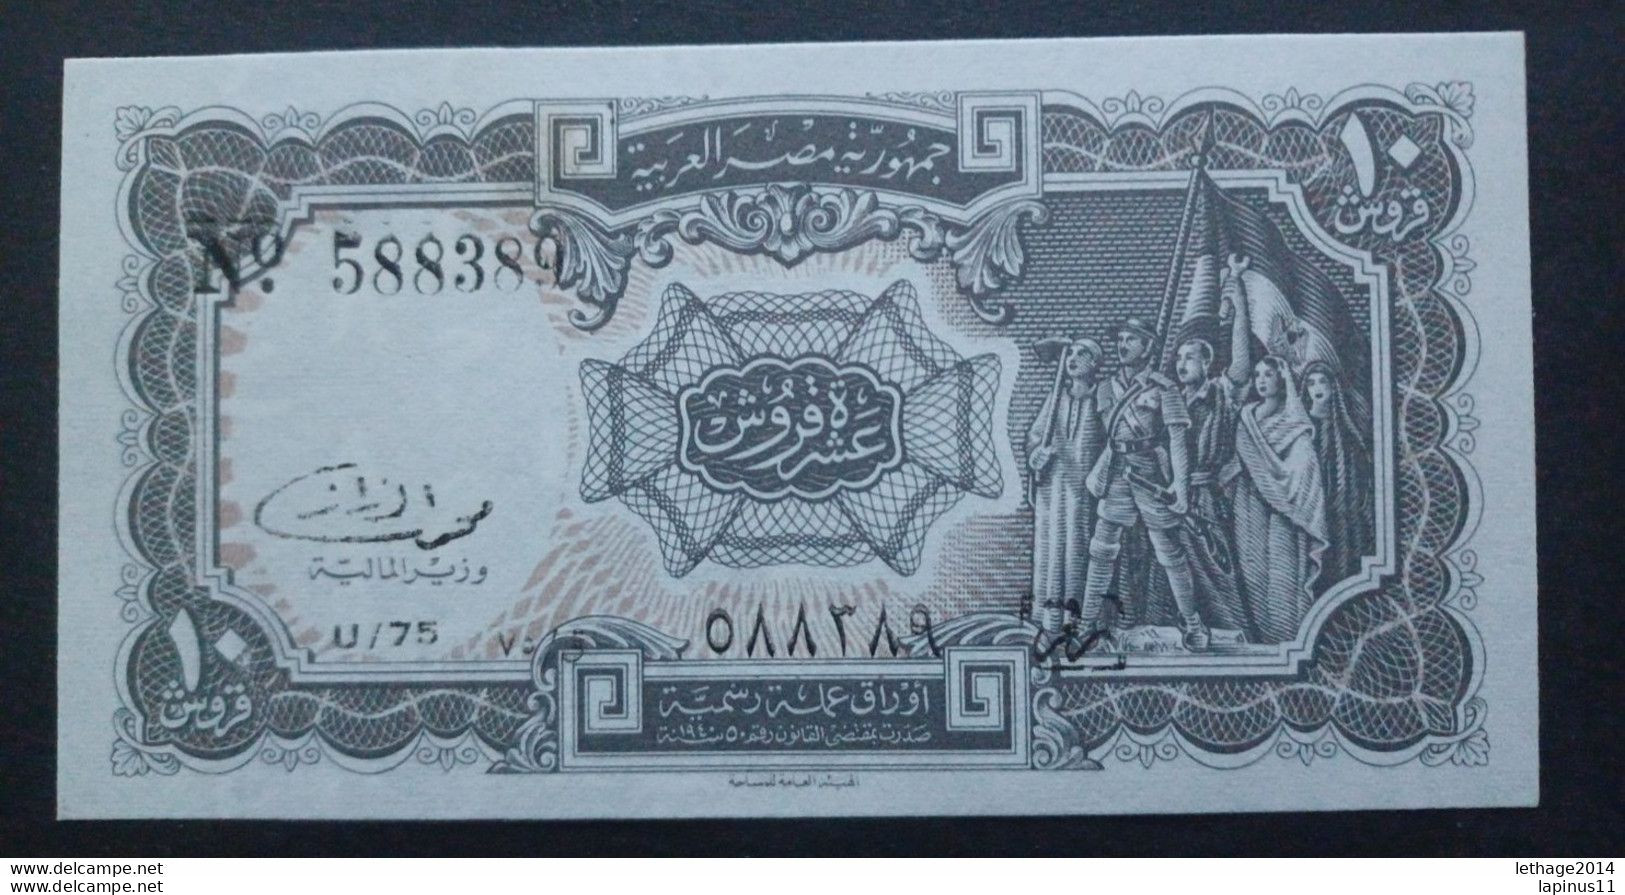 BANKNOTE EGYPT مصر EGYPT 10 PIASTRES 1952 UNCIRCULATED ERROR PRINT - Egipto